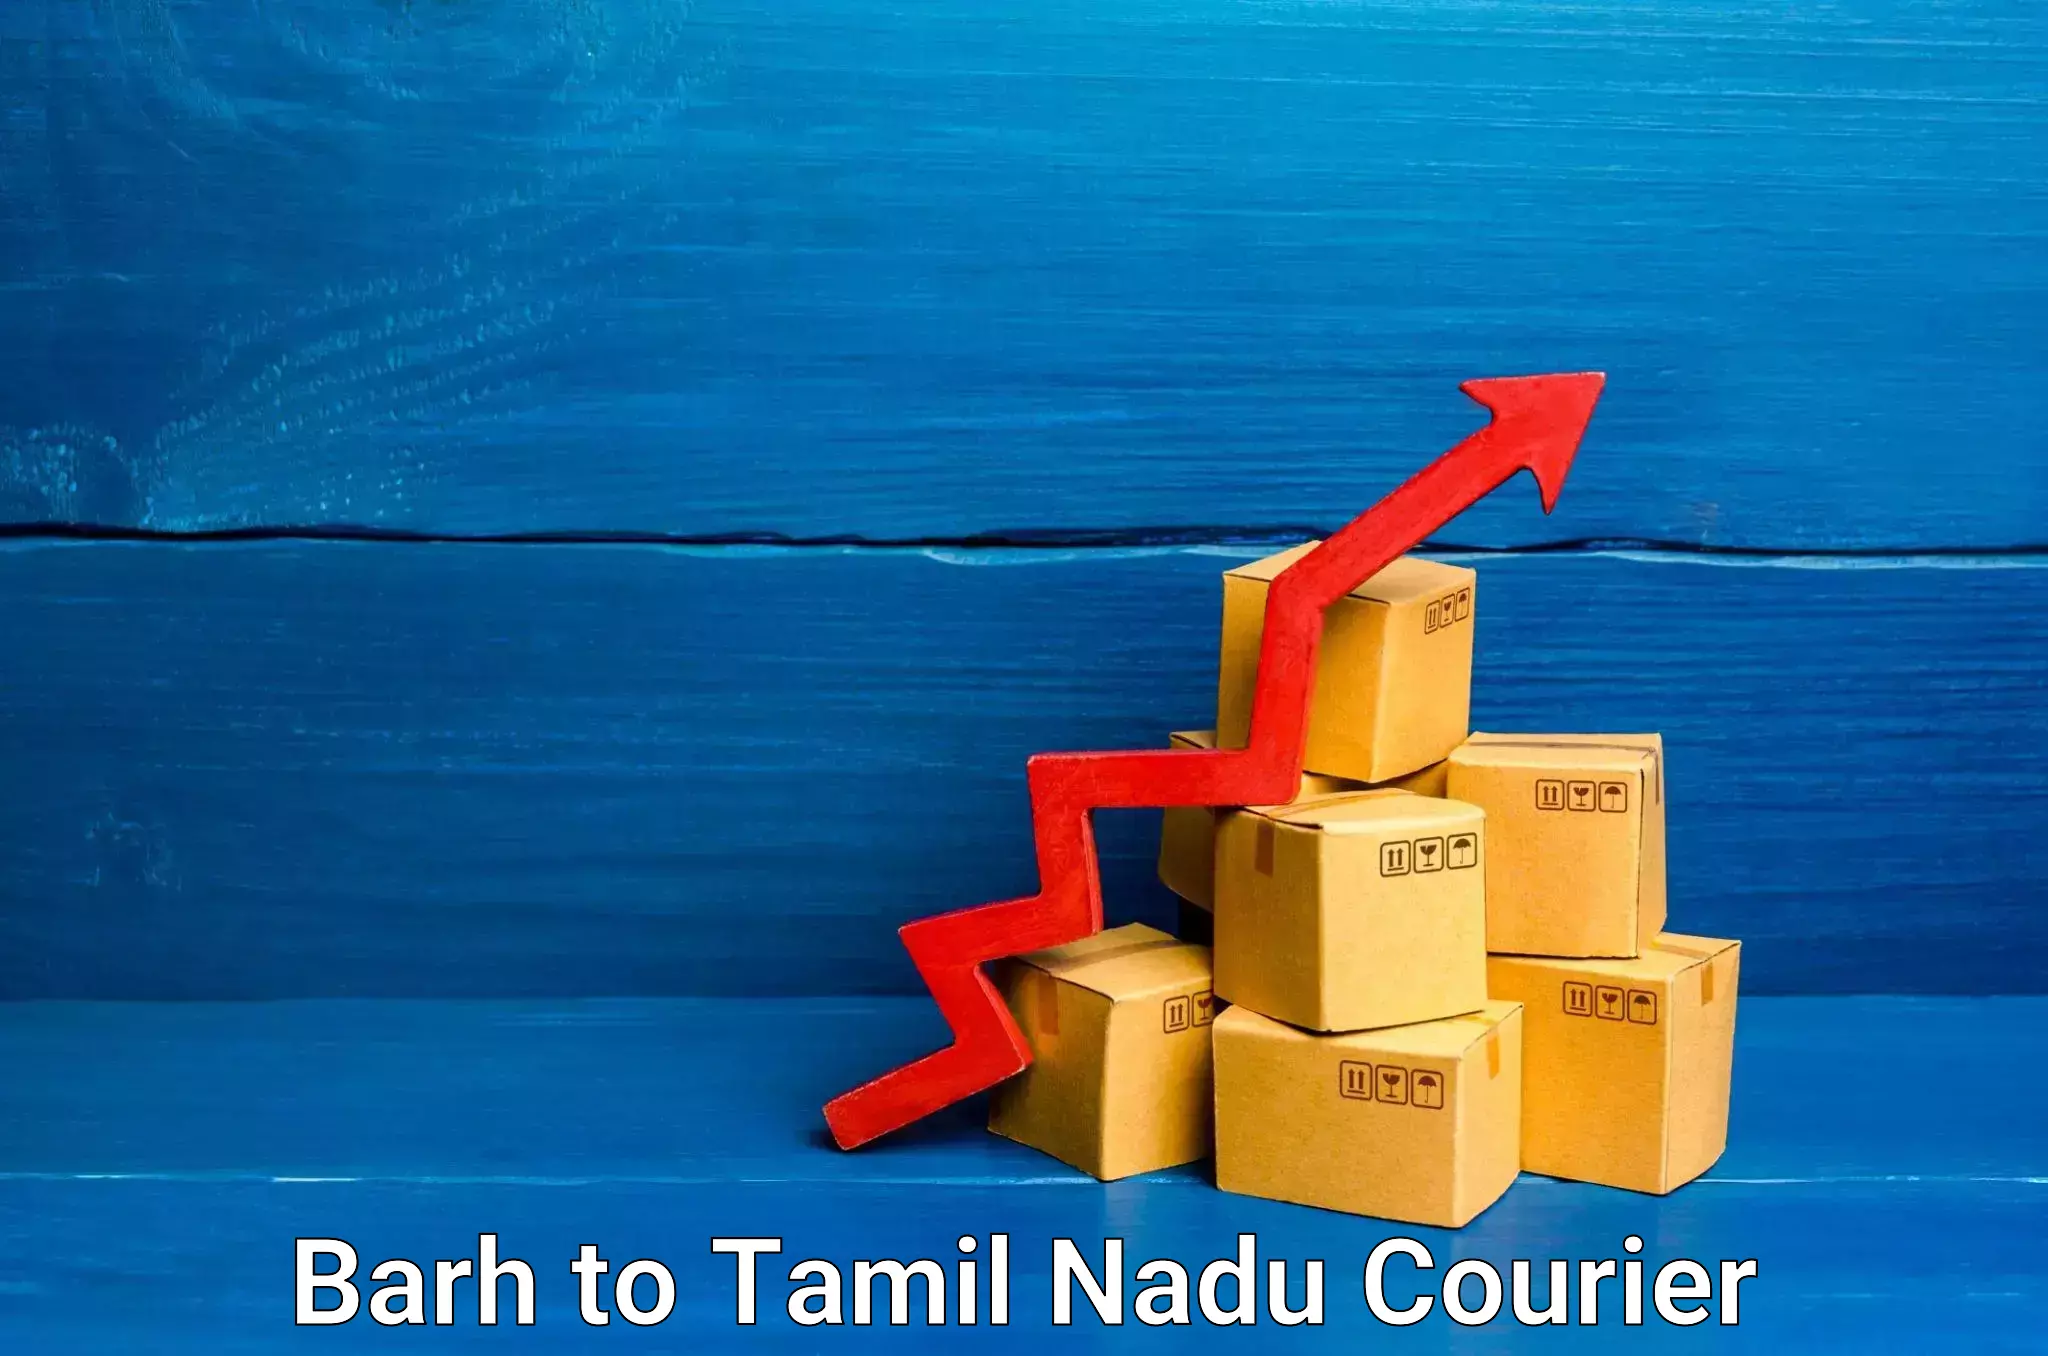 Quality moving company Barh to Tamil Nadu